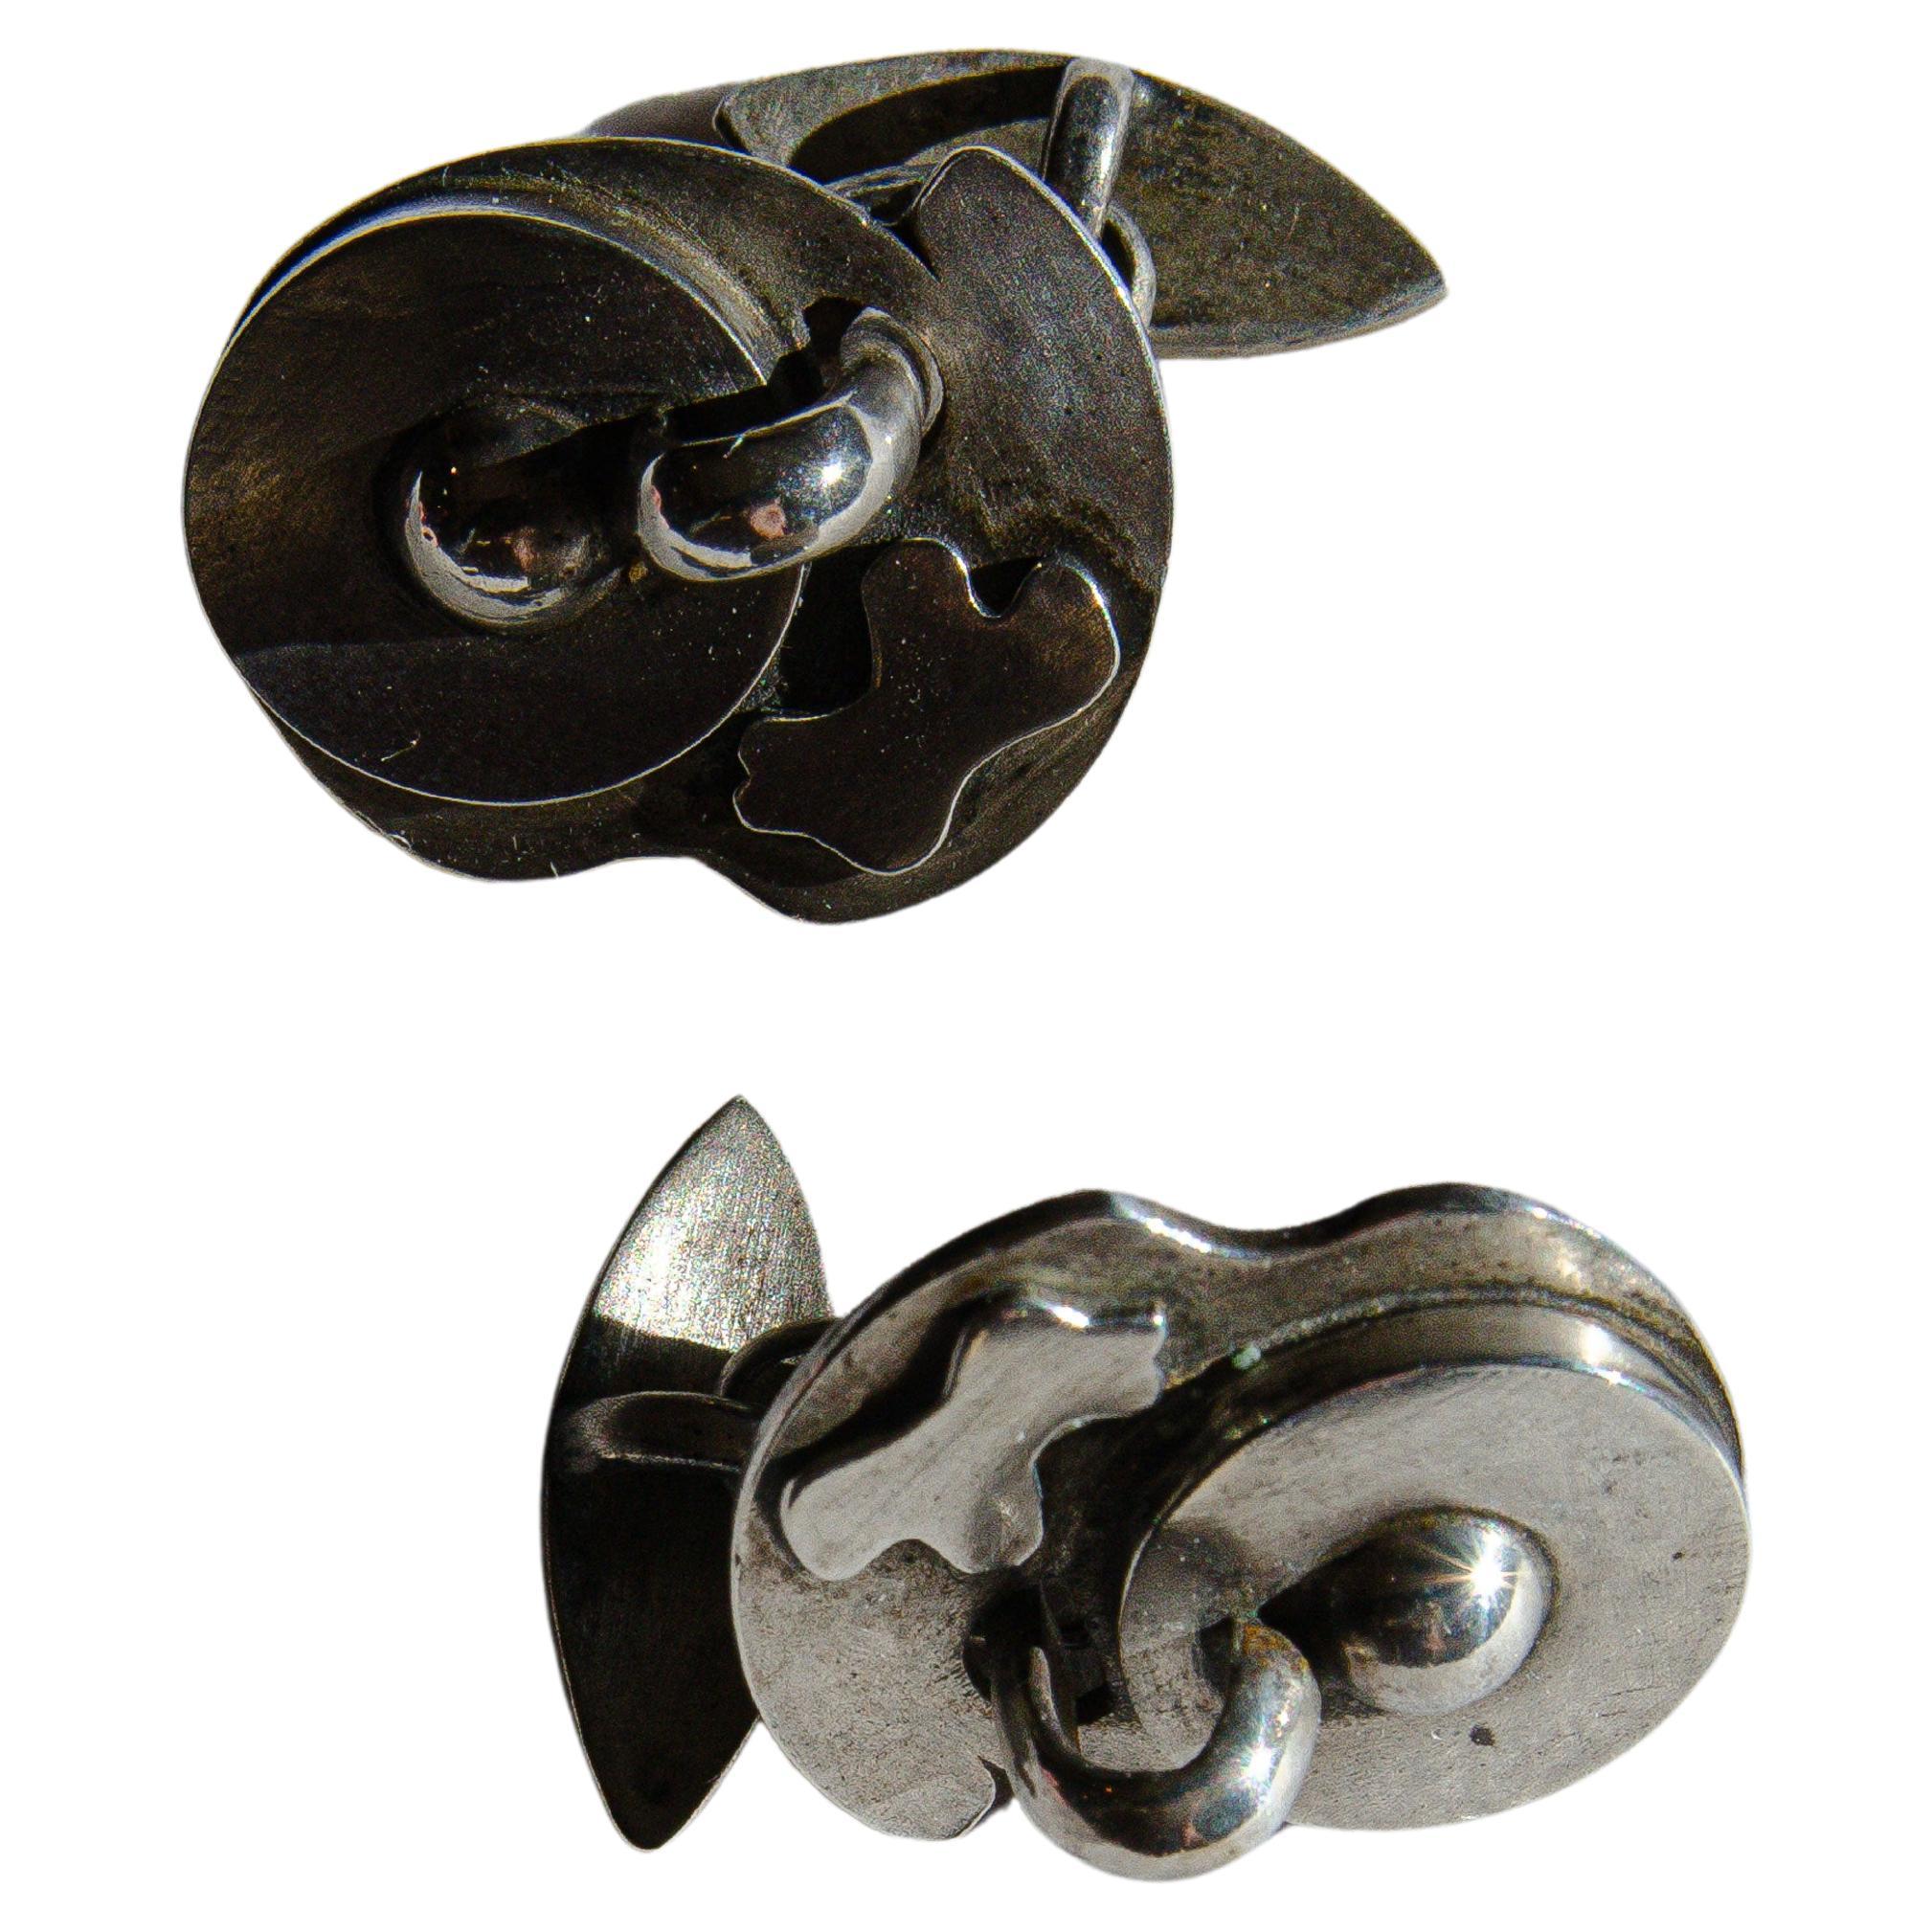 Exceptional pair of sterling silver modernist cufflinks designed by Sam Kramer